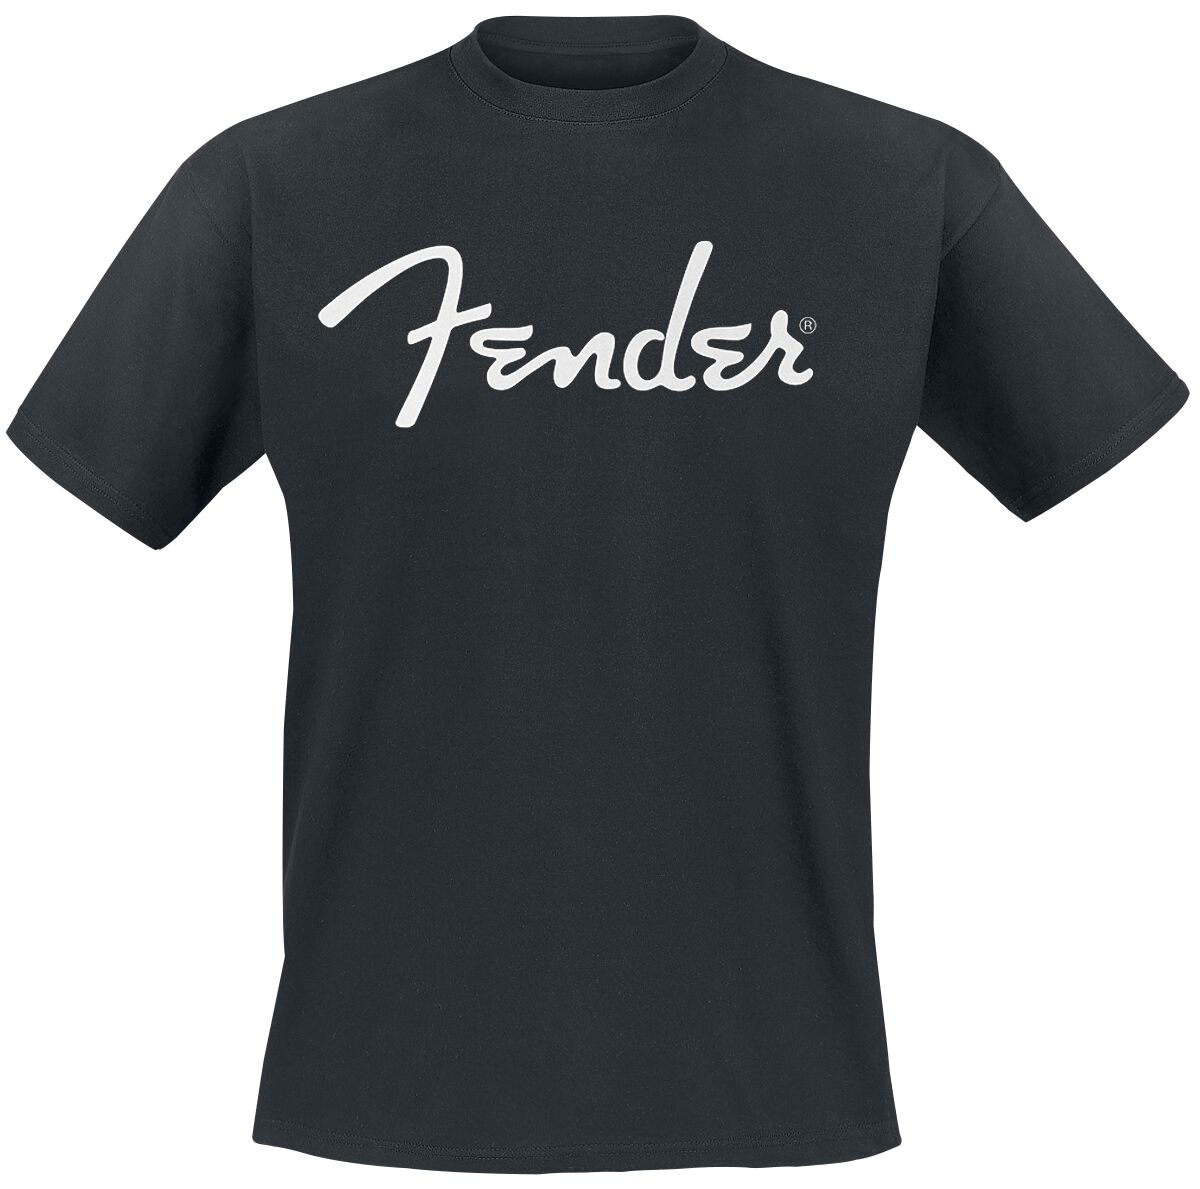 fender t-shirt - classic logo - s bis xxl - fÃ¼r mÃ¤nner - grÃ¶ÃŸe s - - lizenziertes merchandise! schwarz